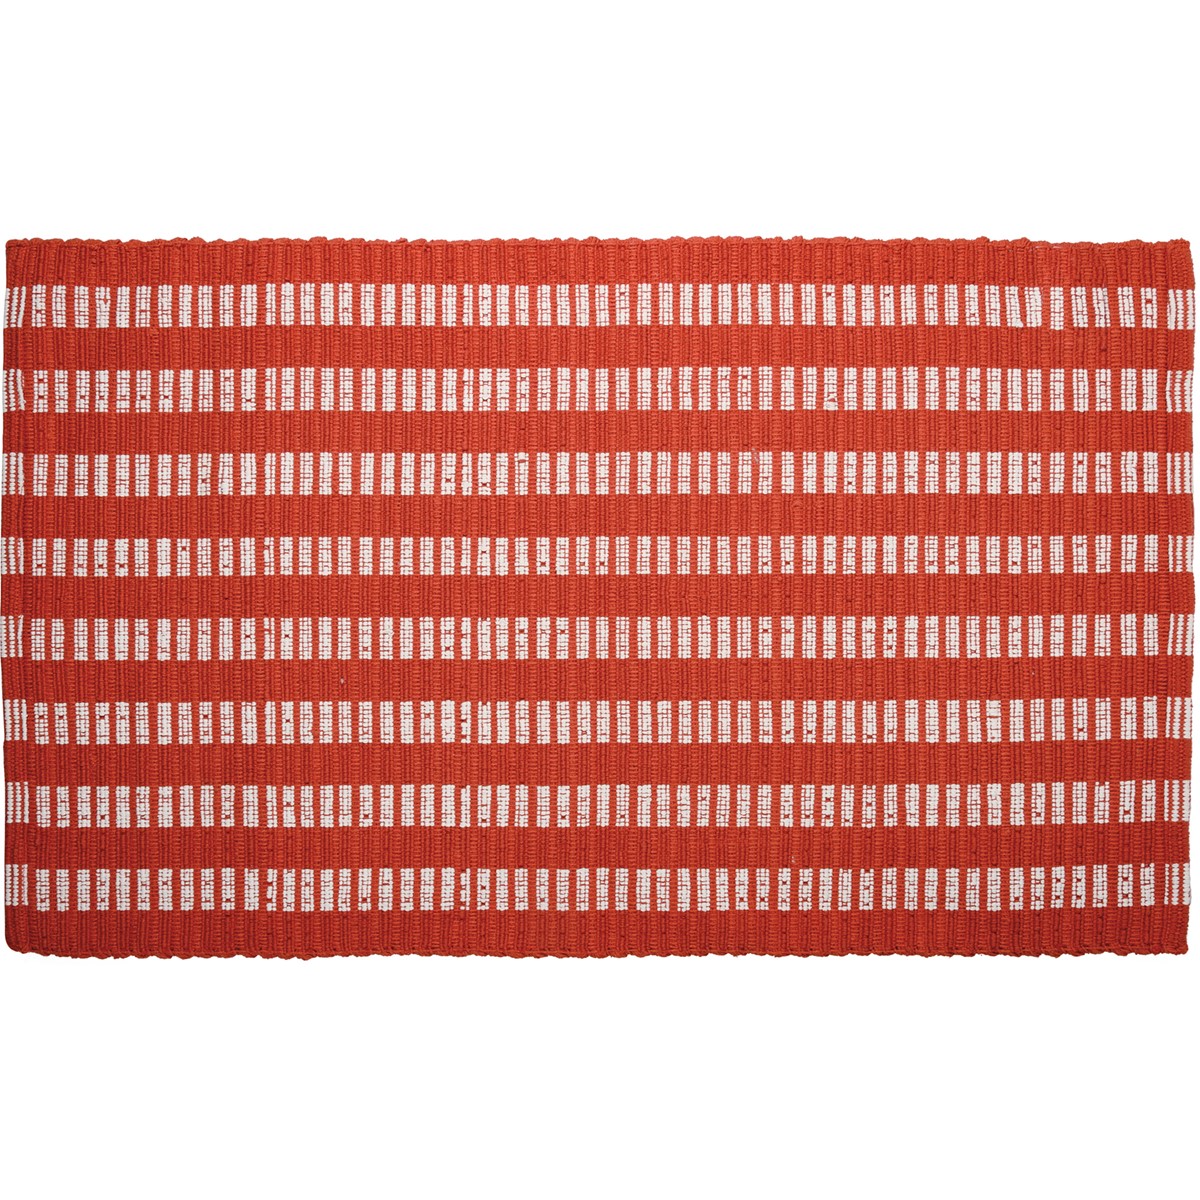 Rug - Orange Stripe - 34" x 20" - Cotton, Latex skid-resistant backing